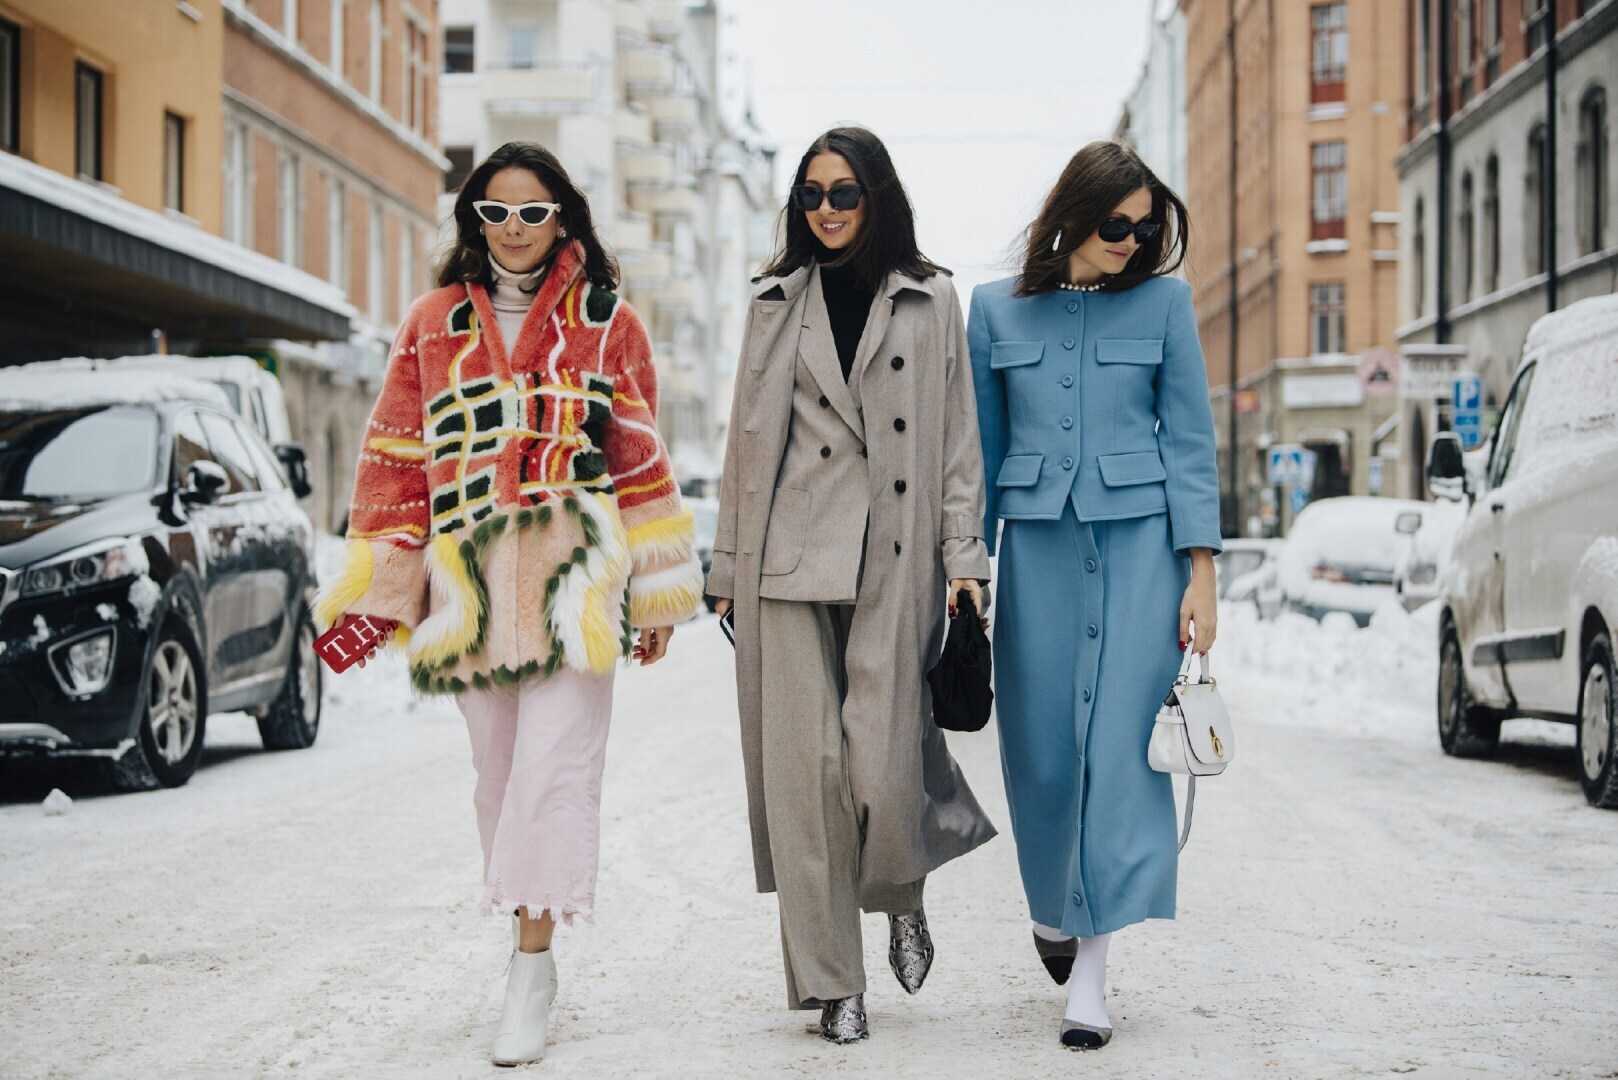 Мода на пальто весна 2018 фото женские